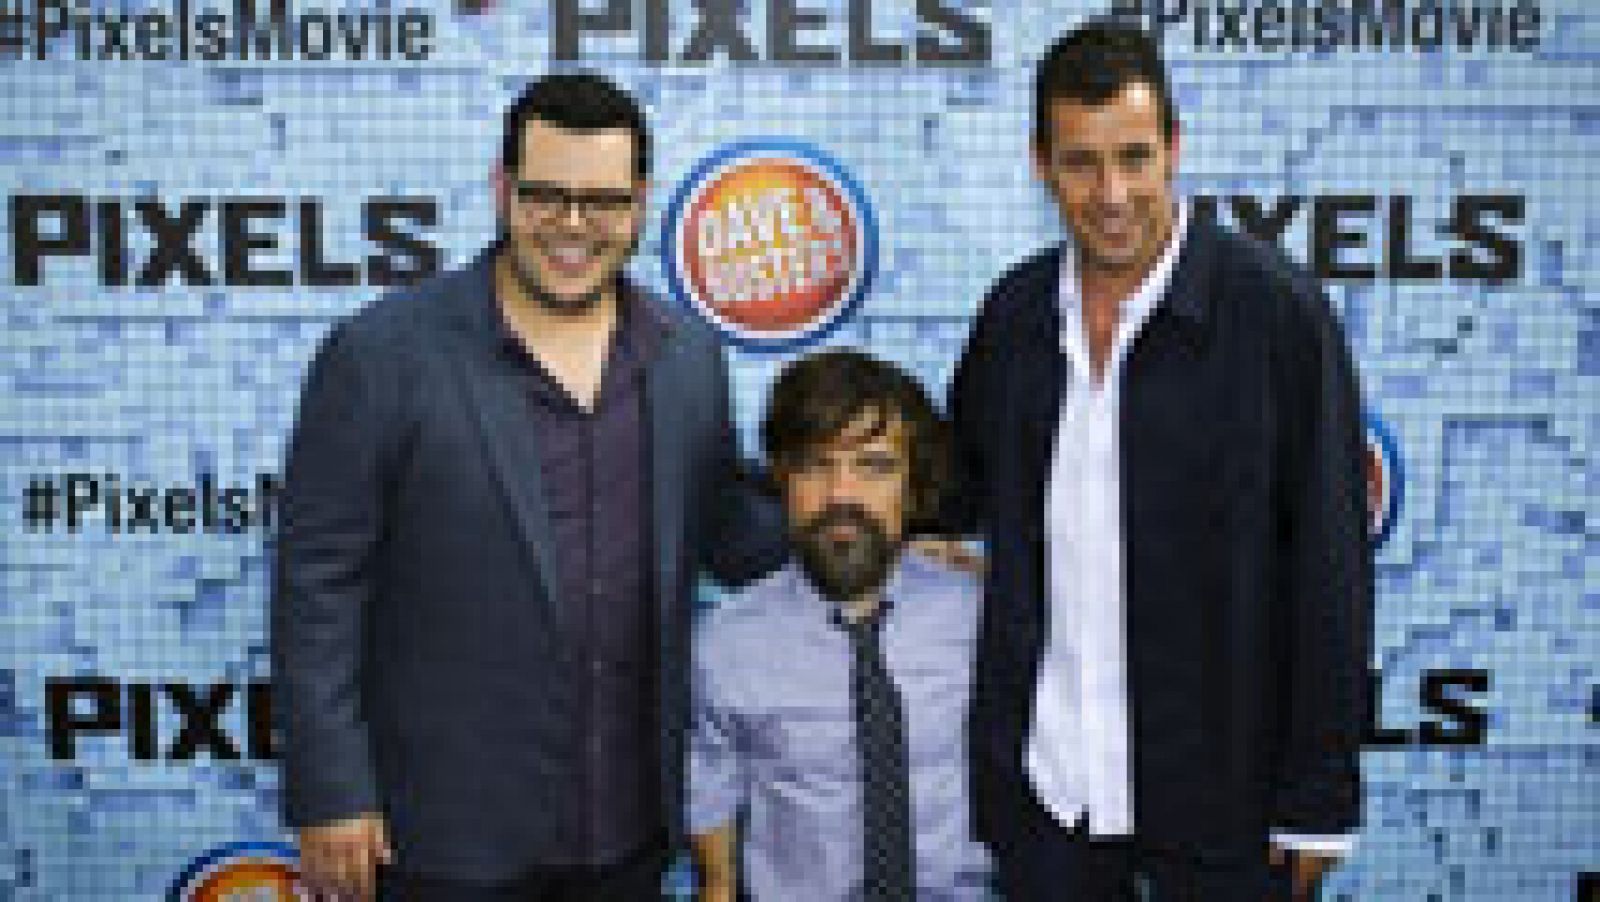 Telediario 1: Estreno de  'Pixels', la nueva comedia de Chris Columbus | RTVE Play